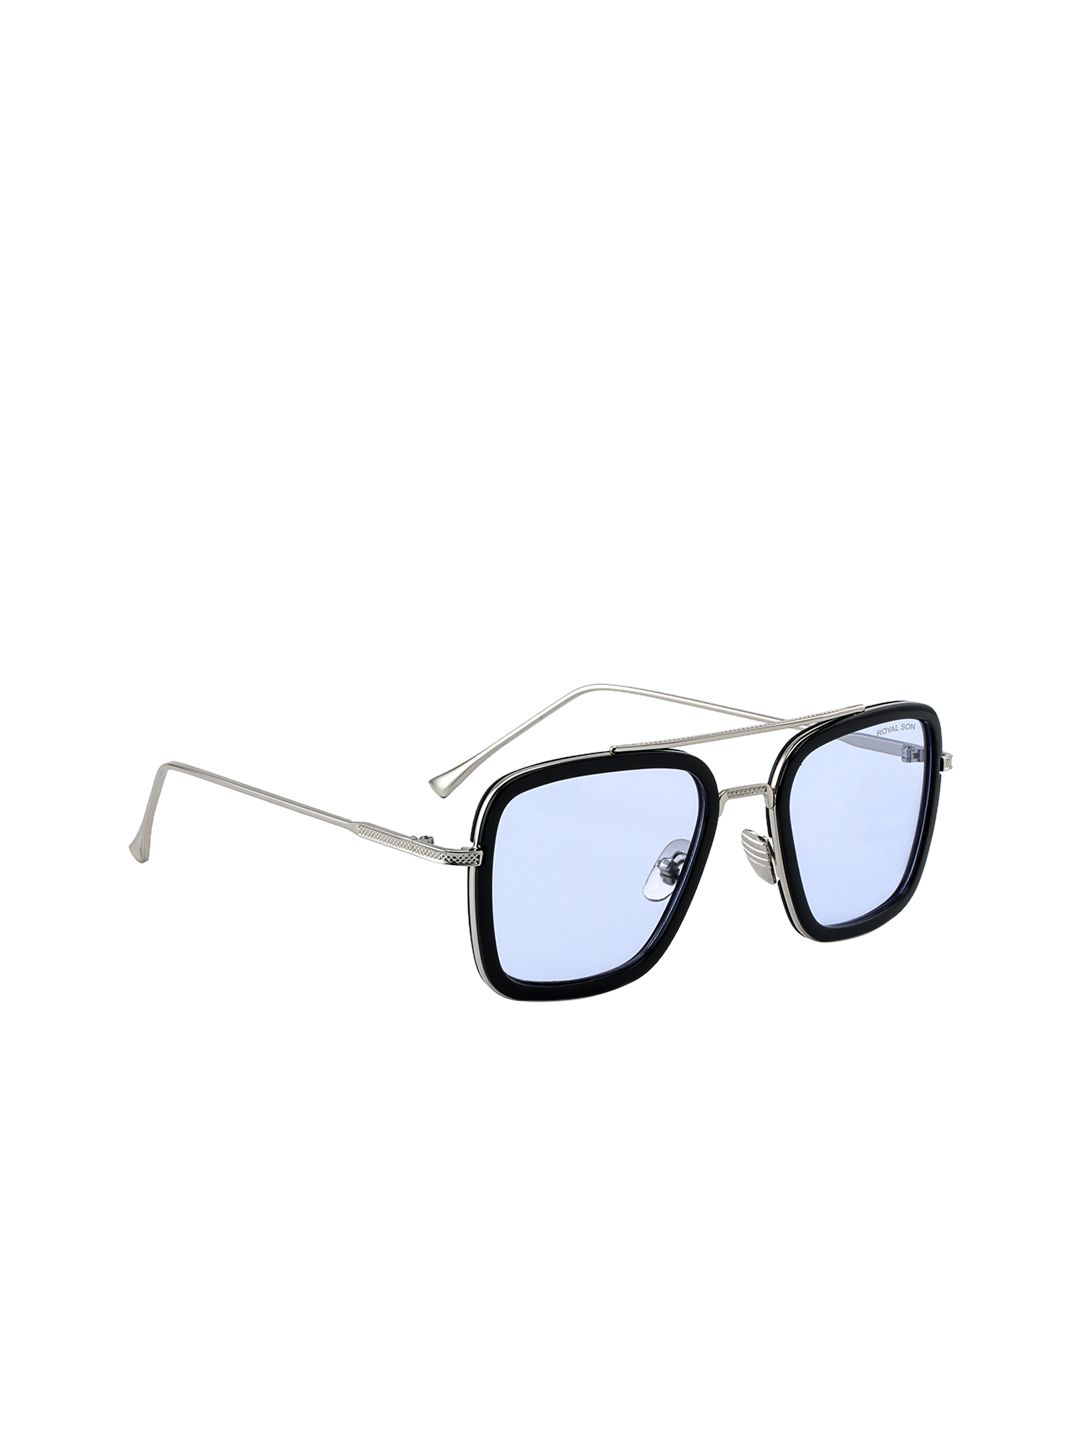 ROYAL SON Unisex UV Protected Square Sunglasses CHI0074 Price in India